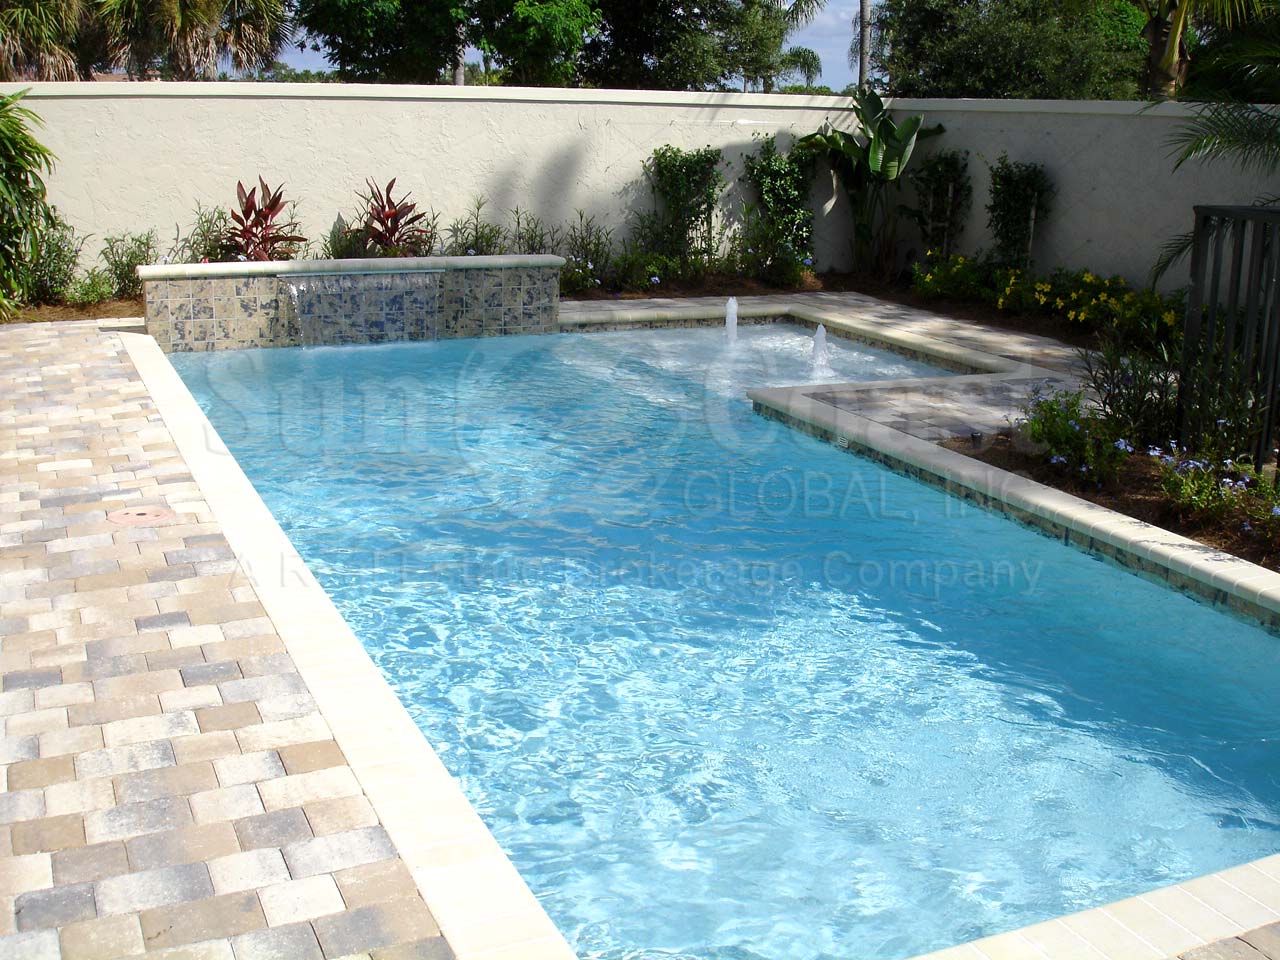 Cordoba single family home pool